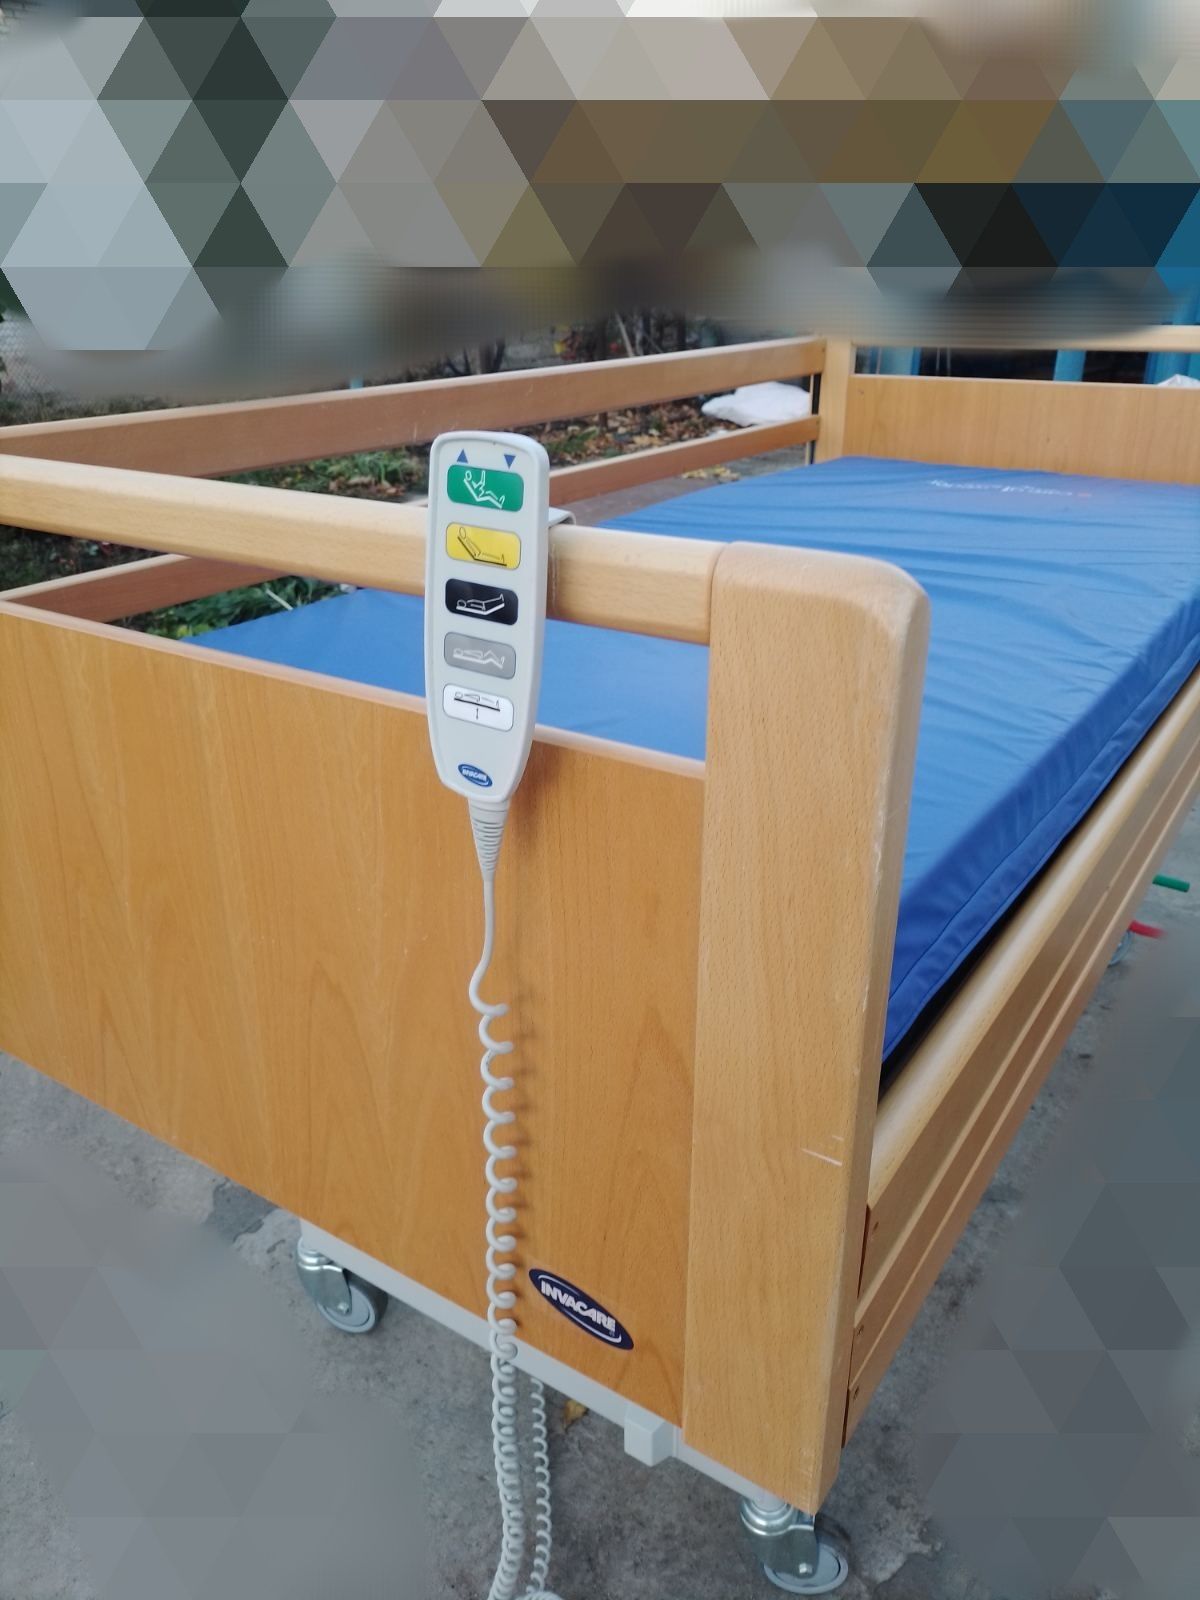 Продам медичне багатофункціональне ліжко